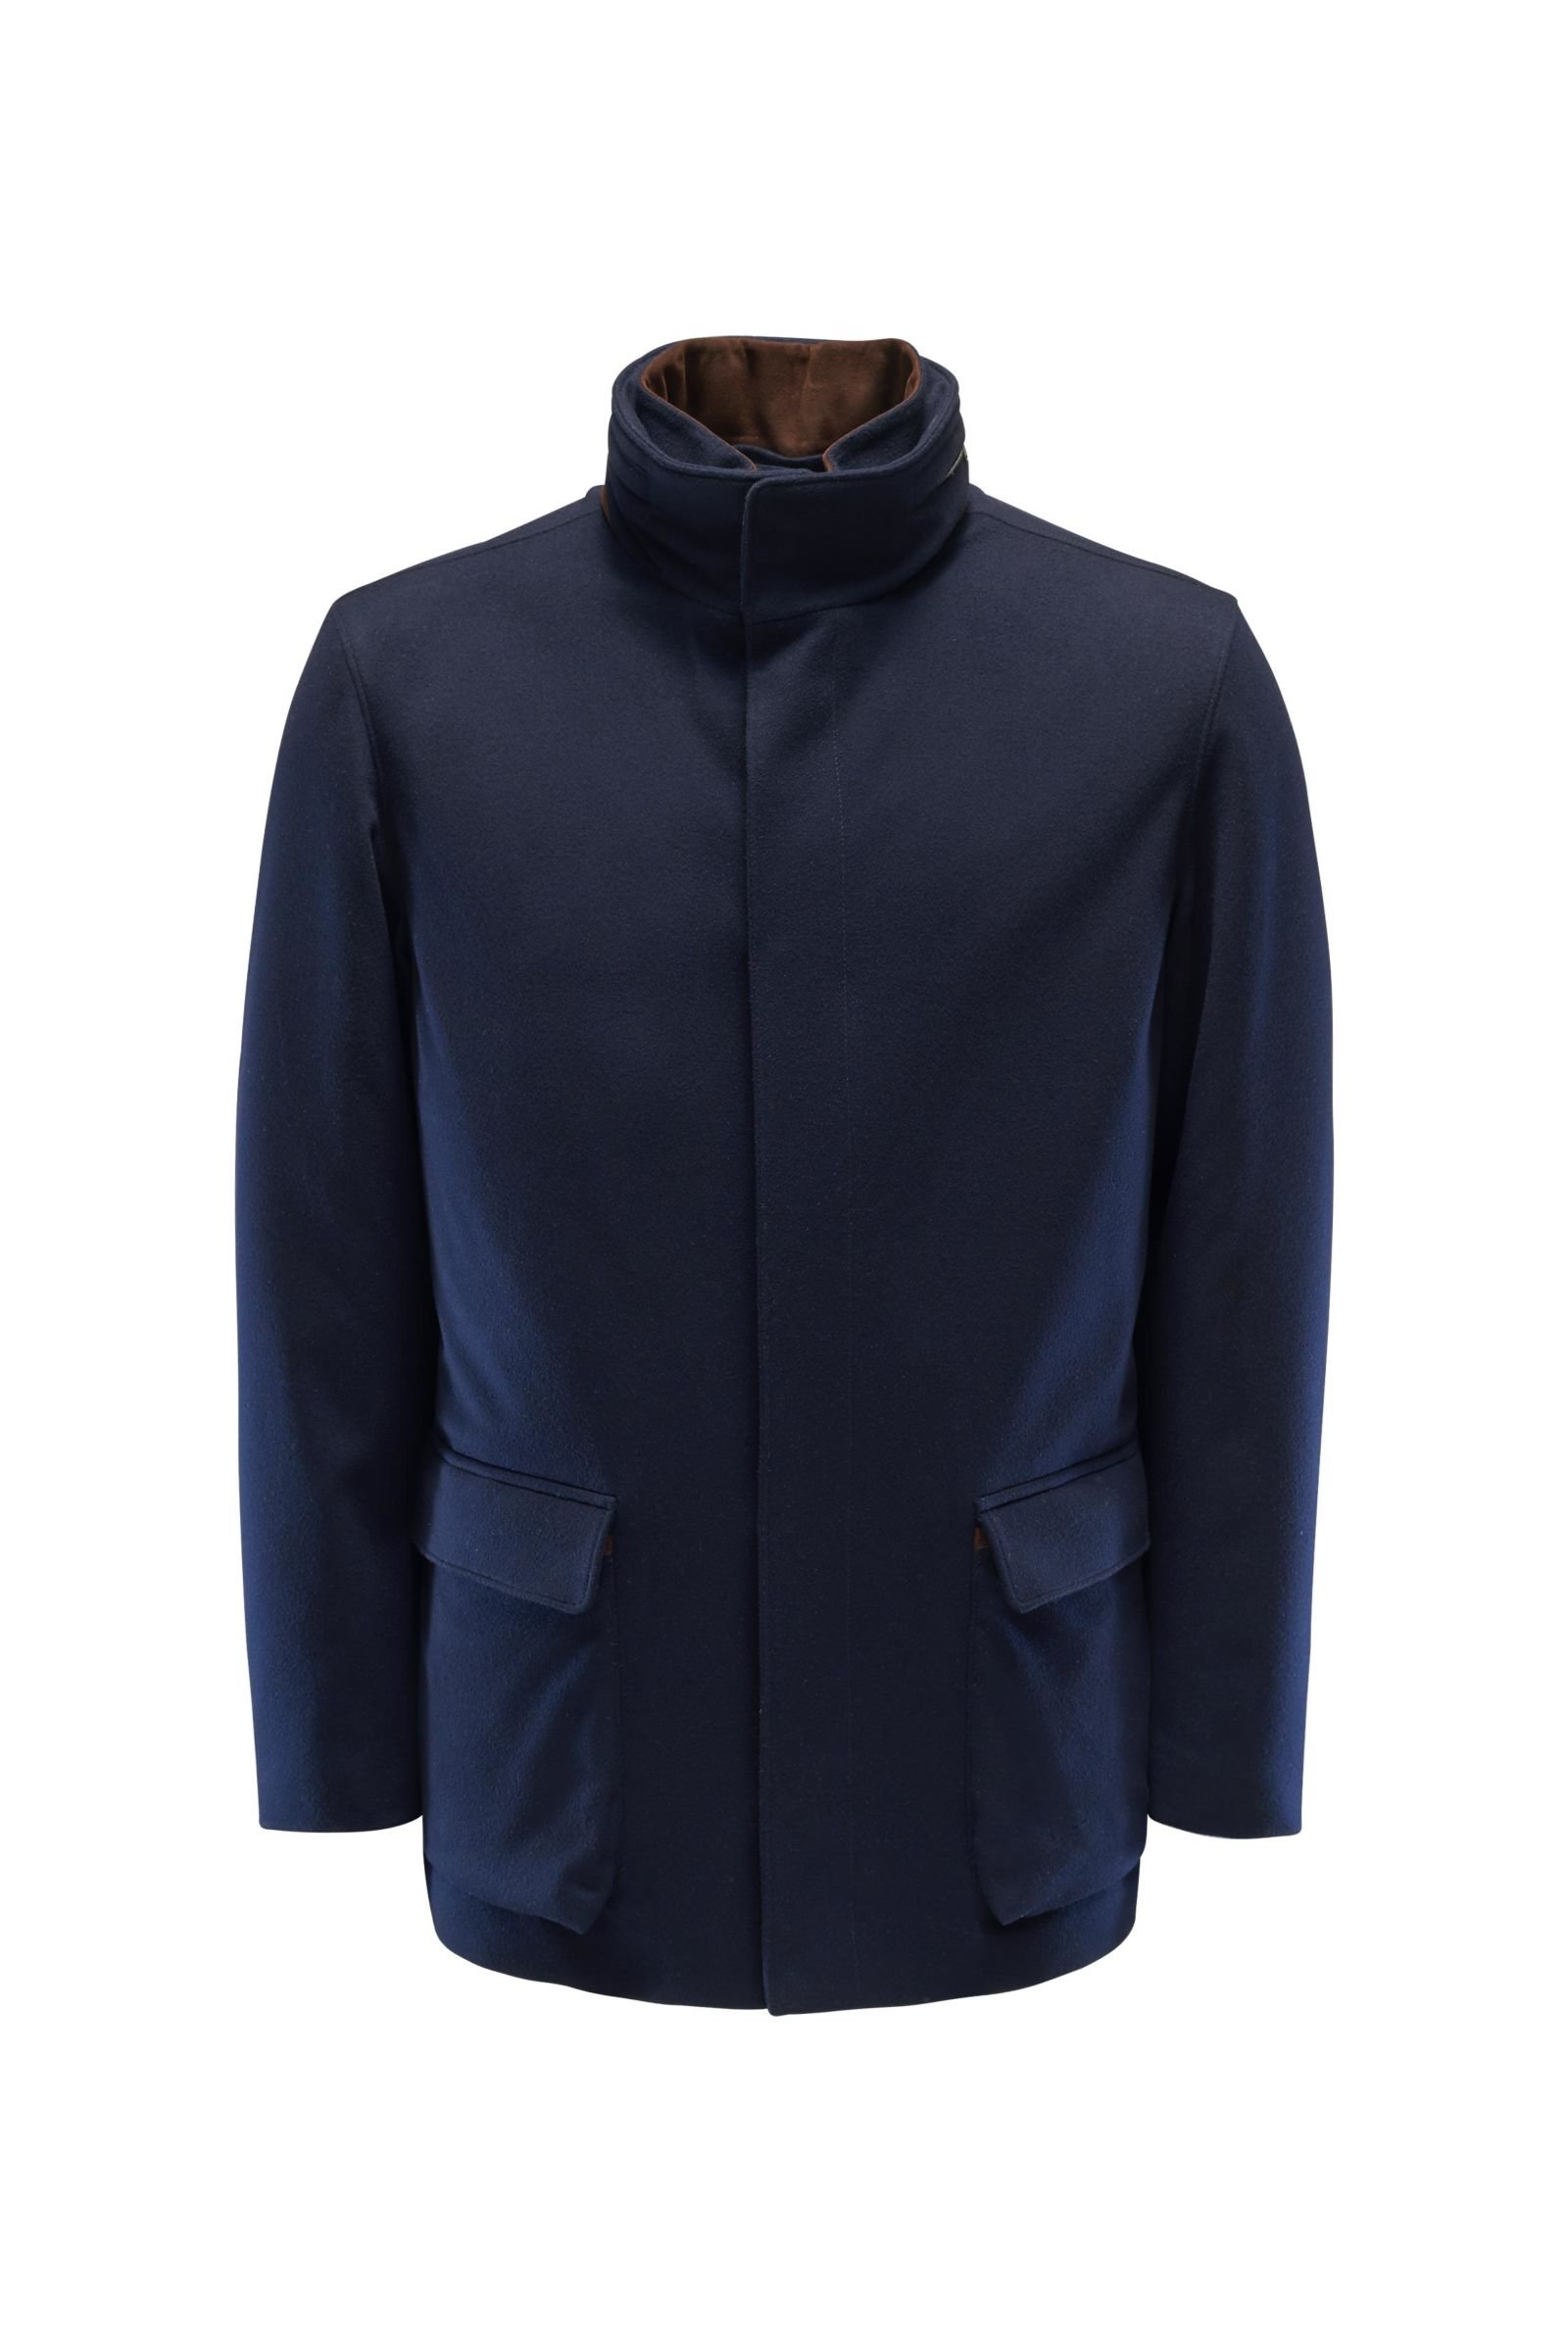 LORO PIANA cashmere jacket 'Winter Voyager' navy | BRAUN Hamburg